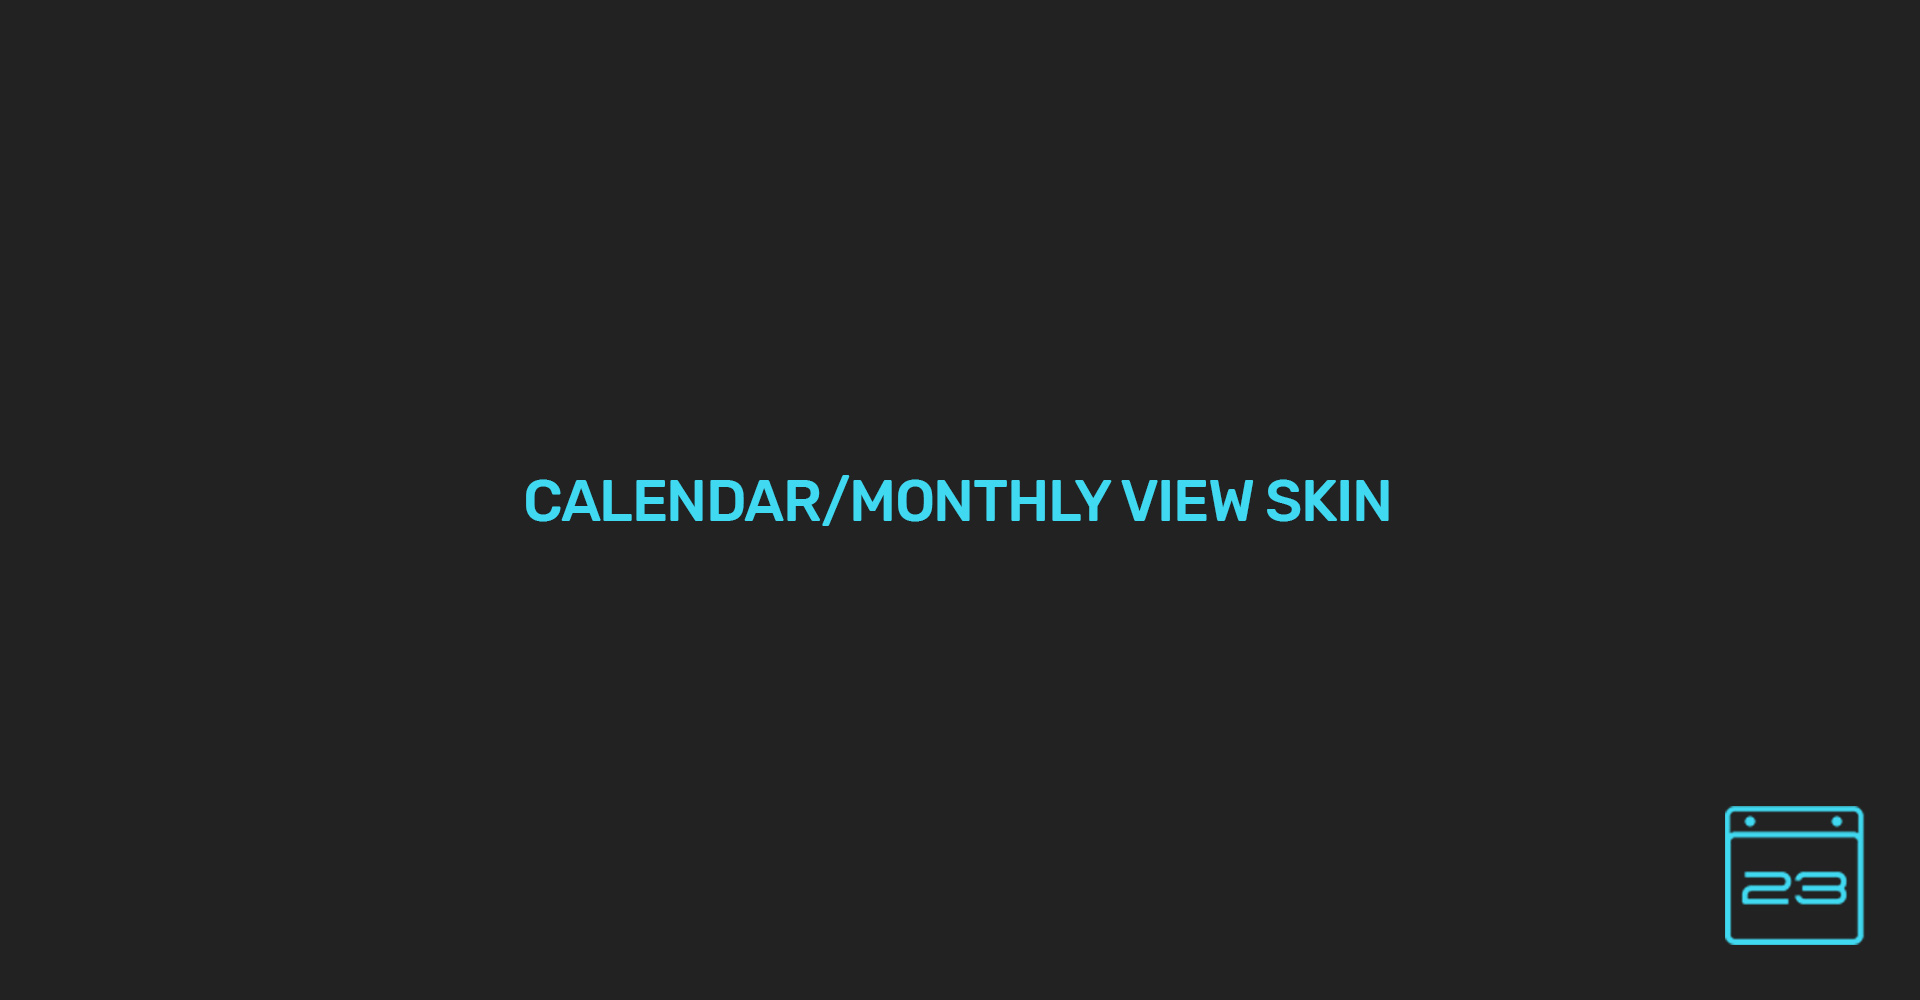 Calendar/Monthly View Skin Settings Modern Events Calendar Knowledgebase